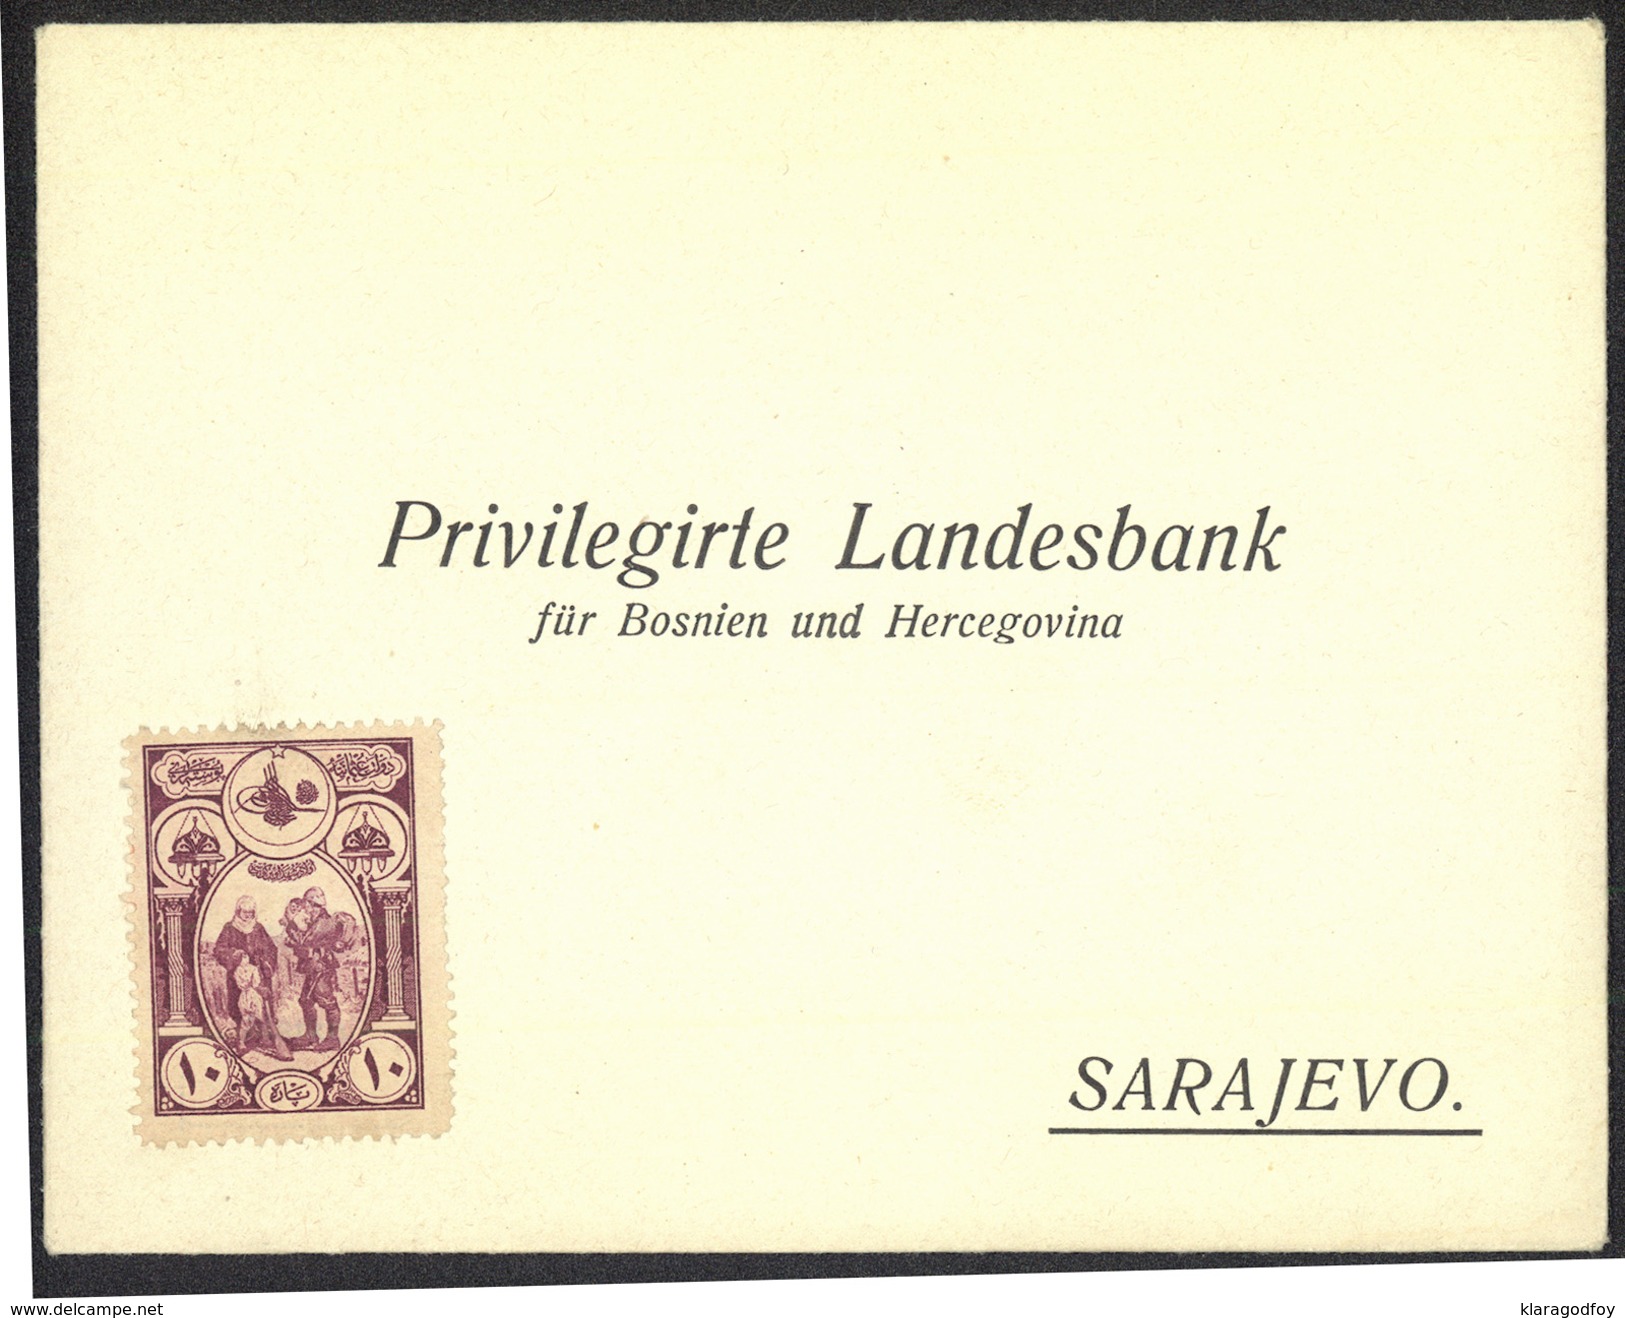 Privilegirte Landesbank Für Bosnien Und Hercegovina Sarajevo Preprinted Letter Cover Not Travelled B170420 - Bosnia And Herzegovina